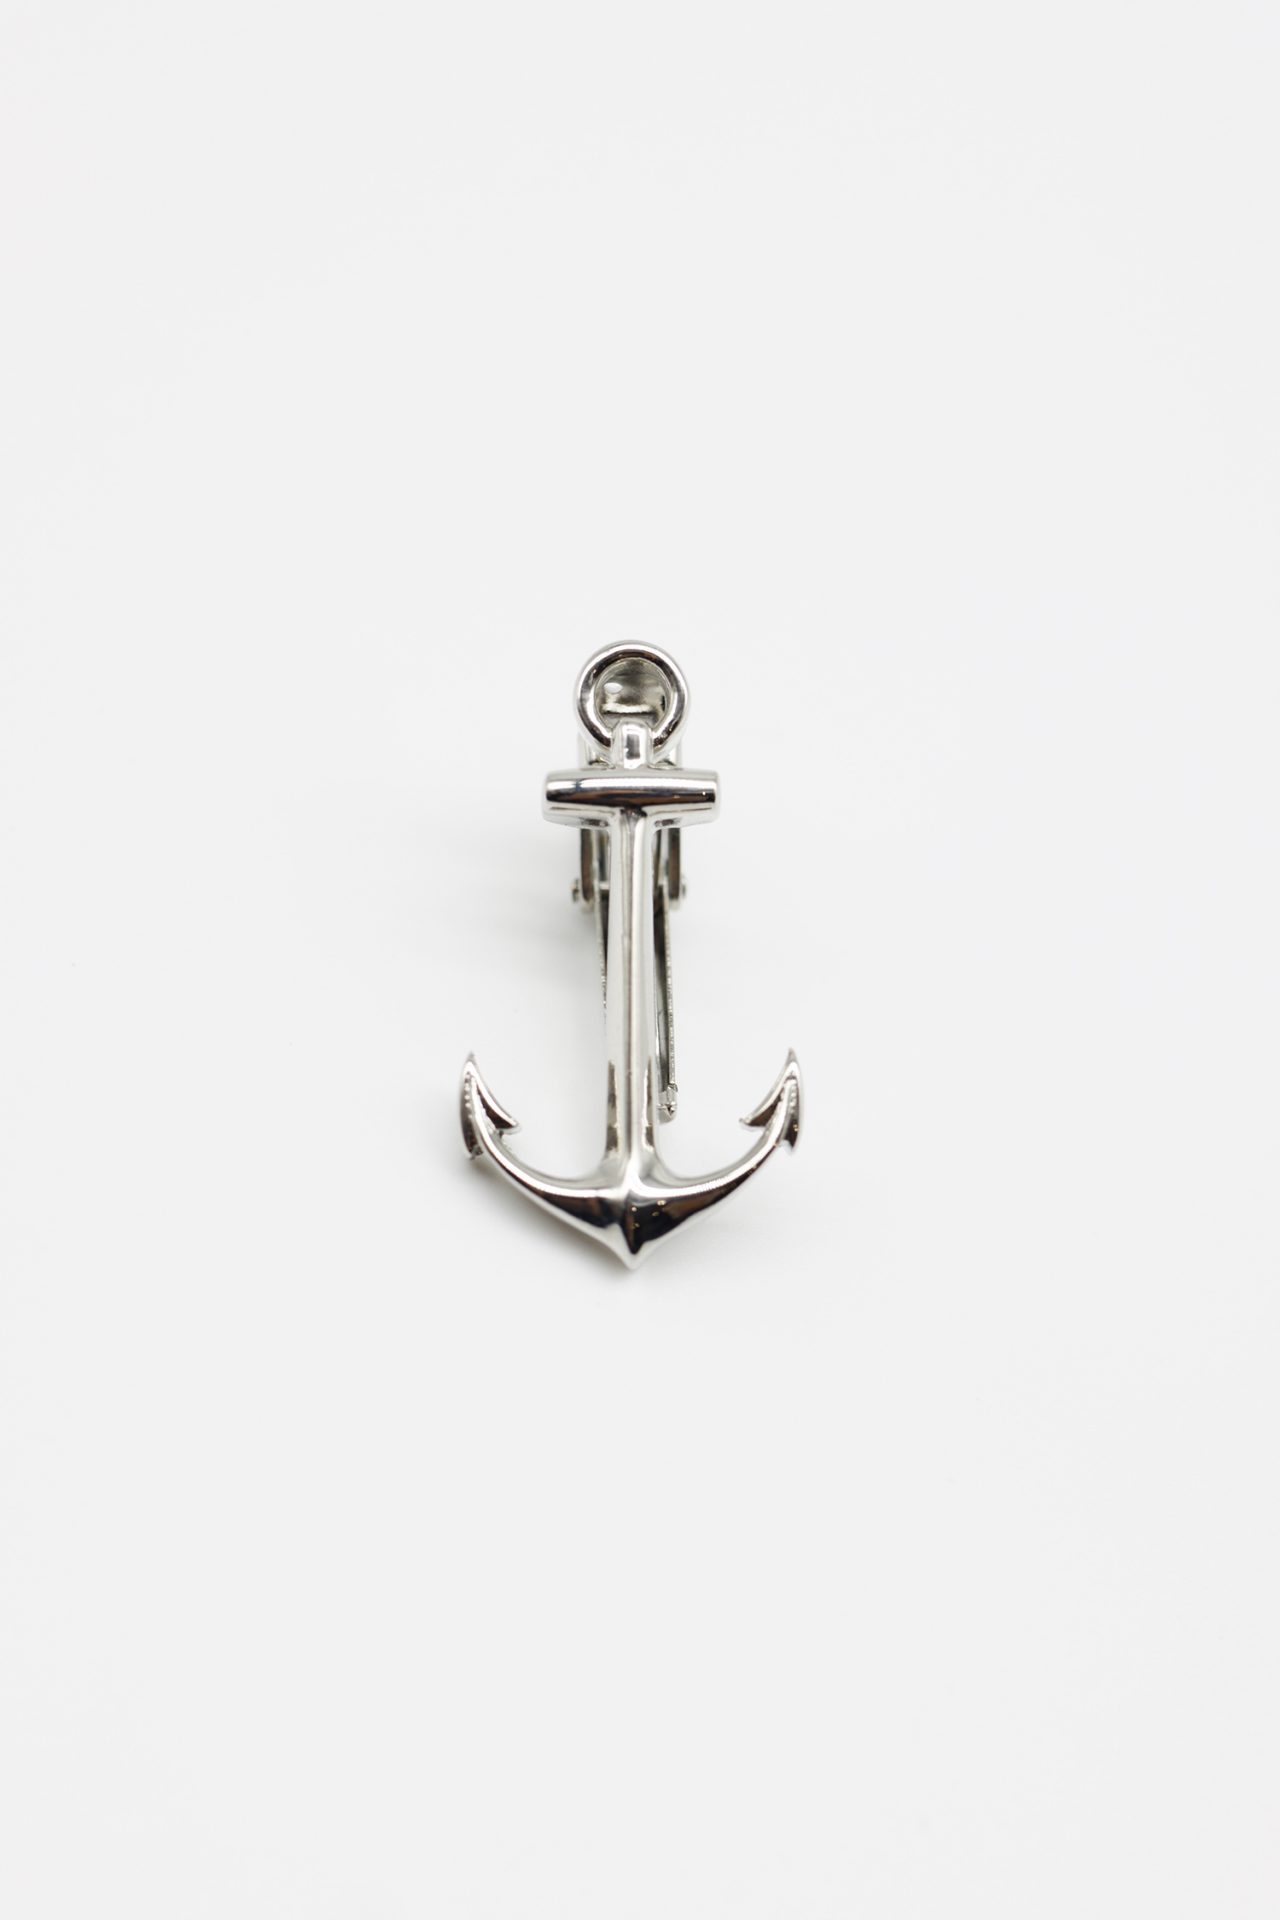 silver anchor tie clip dgrie